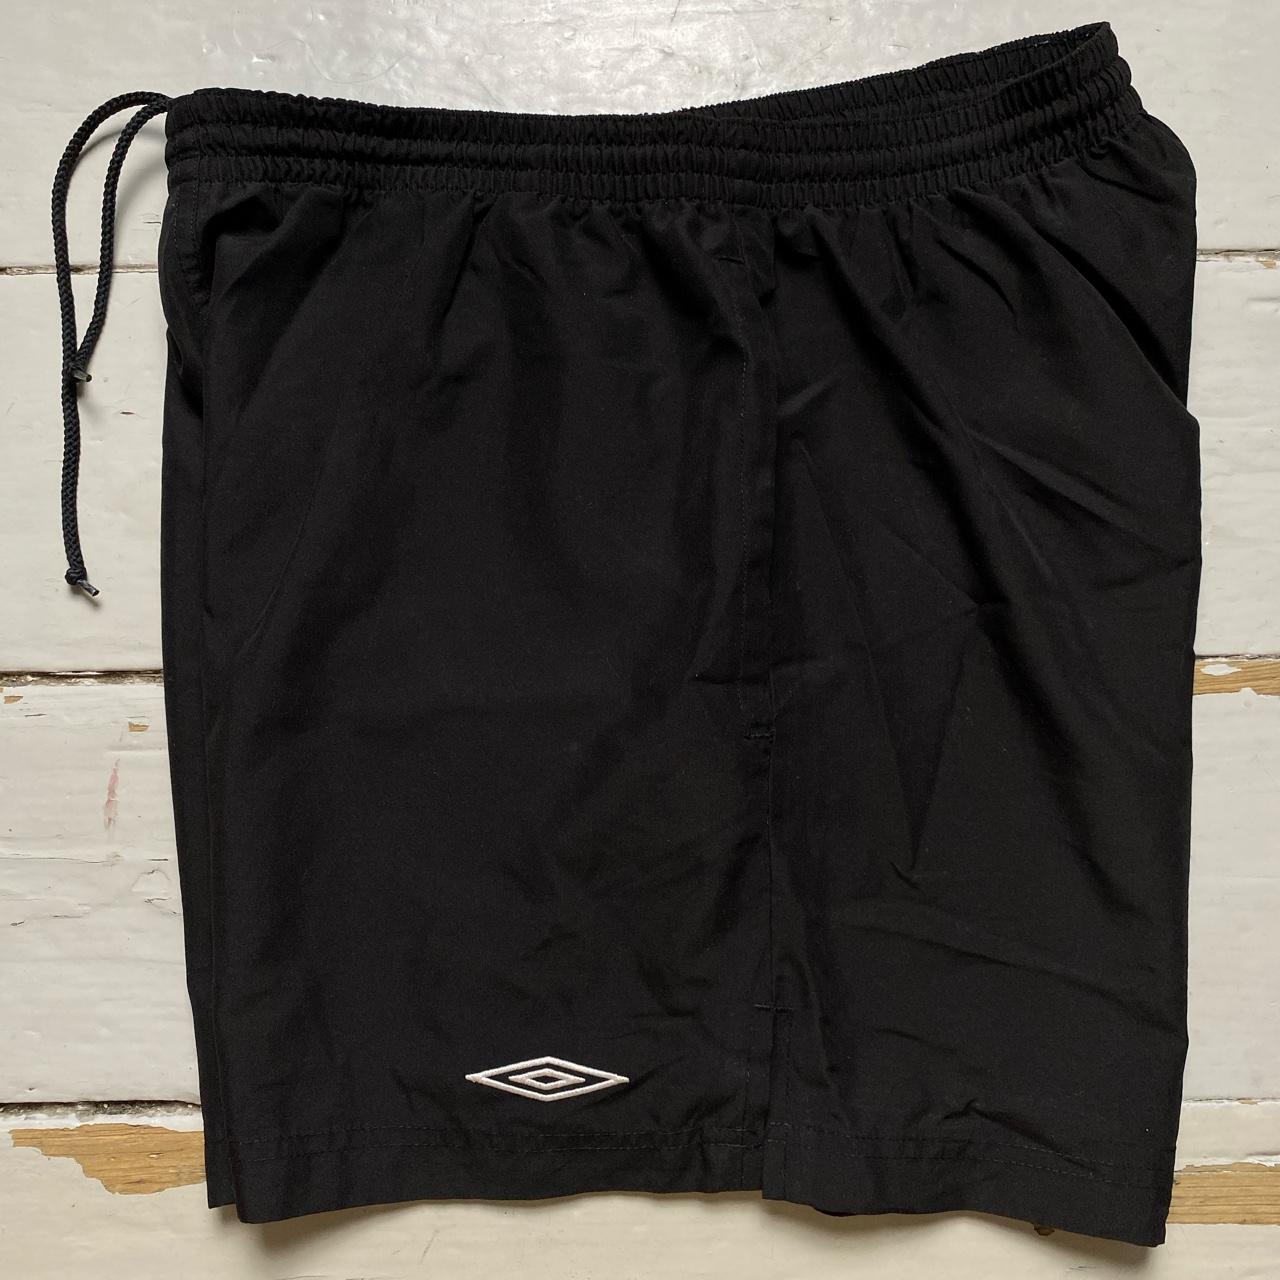 Umbro Black and White Shell Track Pant Shorts